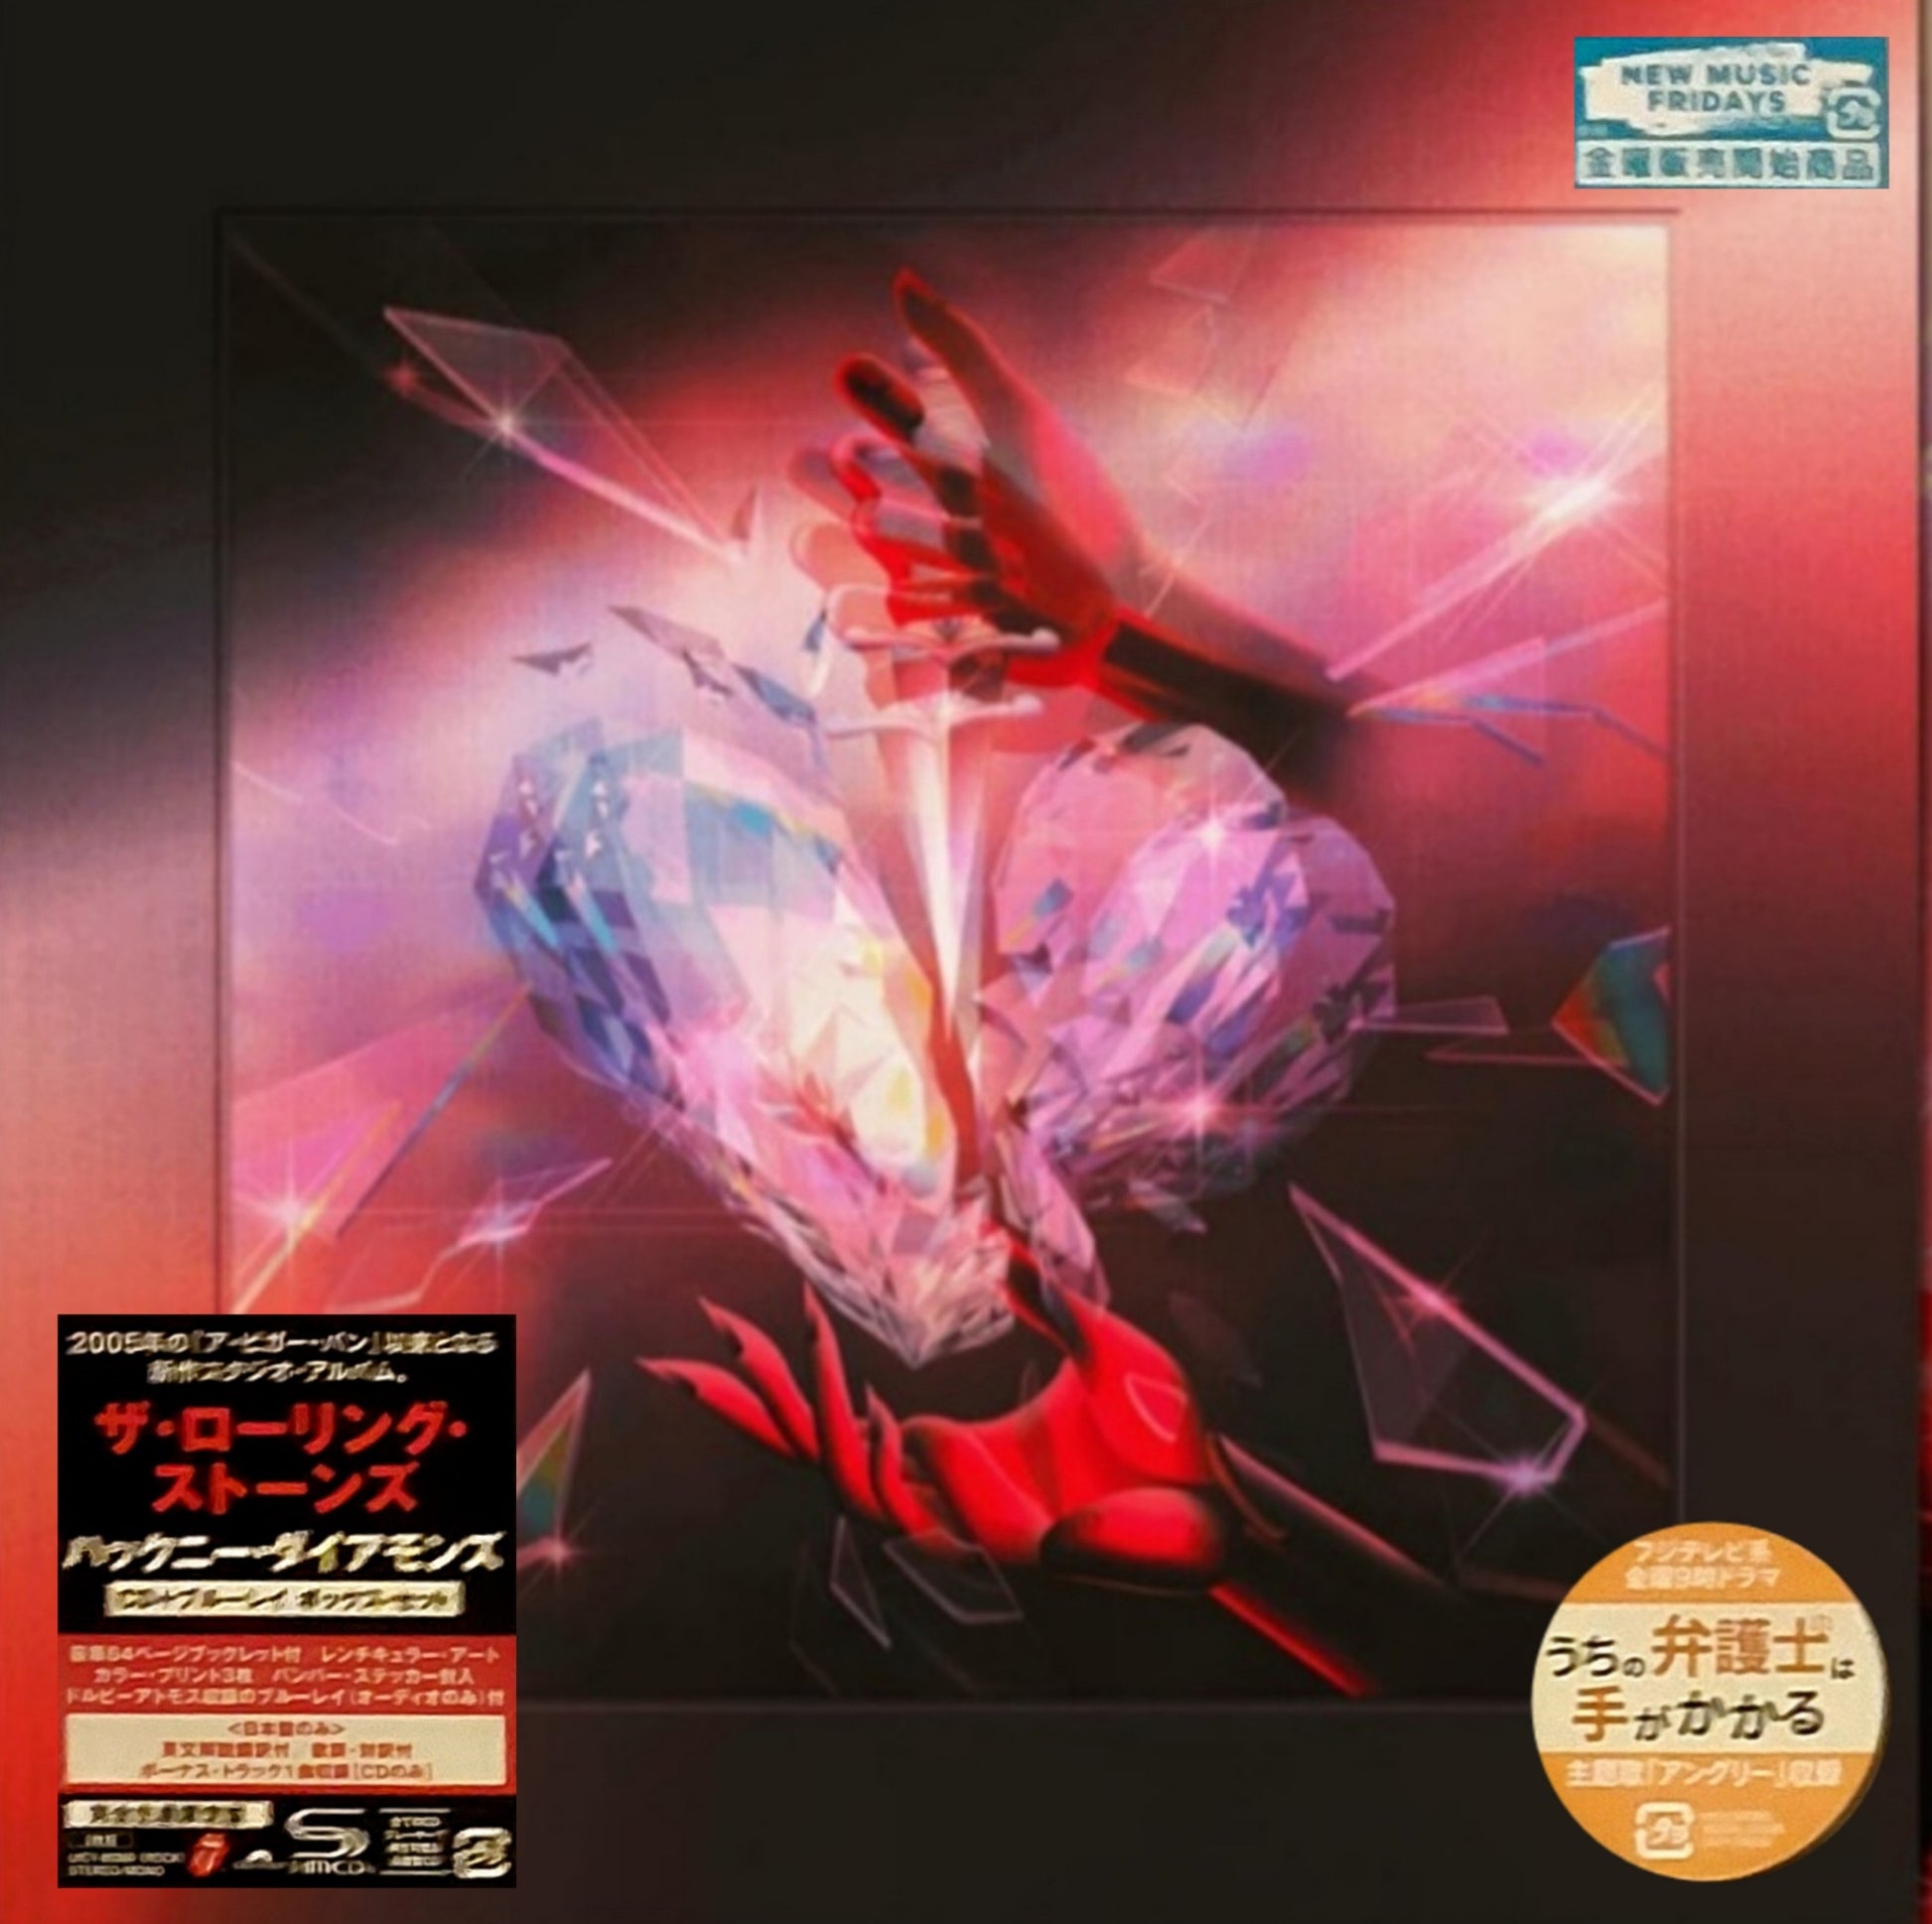 Rolling_Stones_Hackney_Diamonds_Japan_CD_BD-A_Box